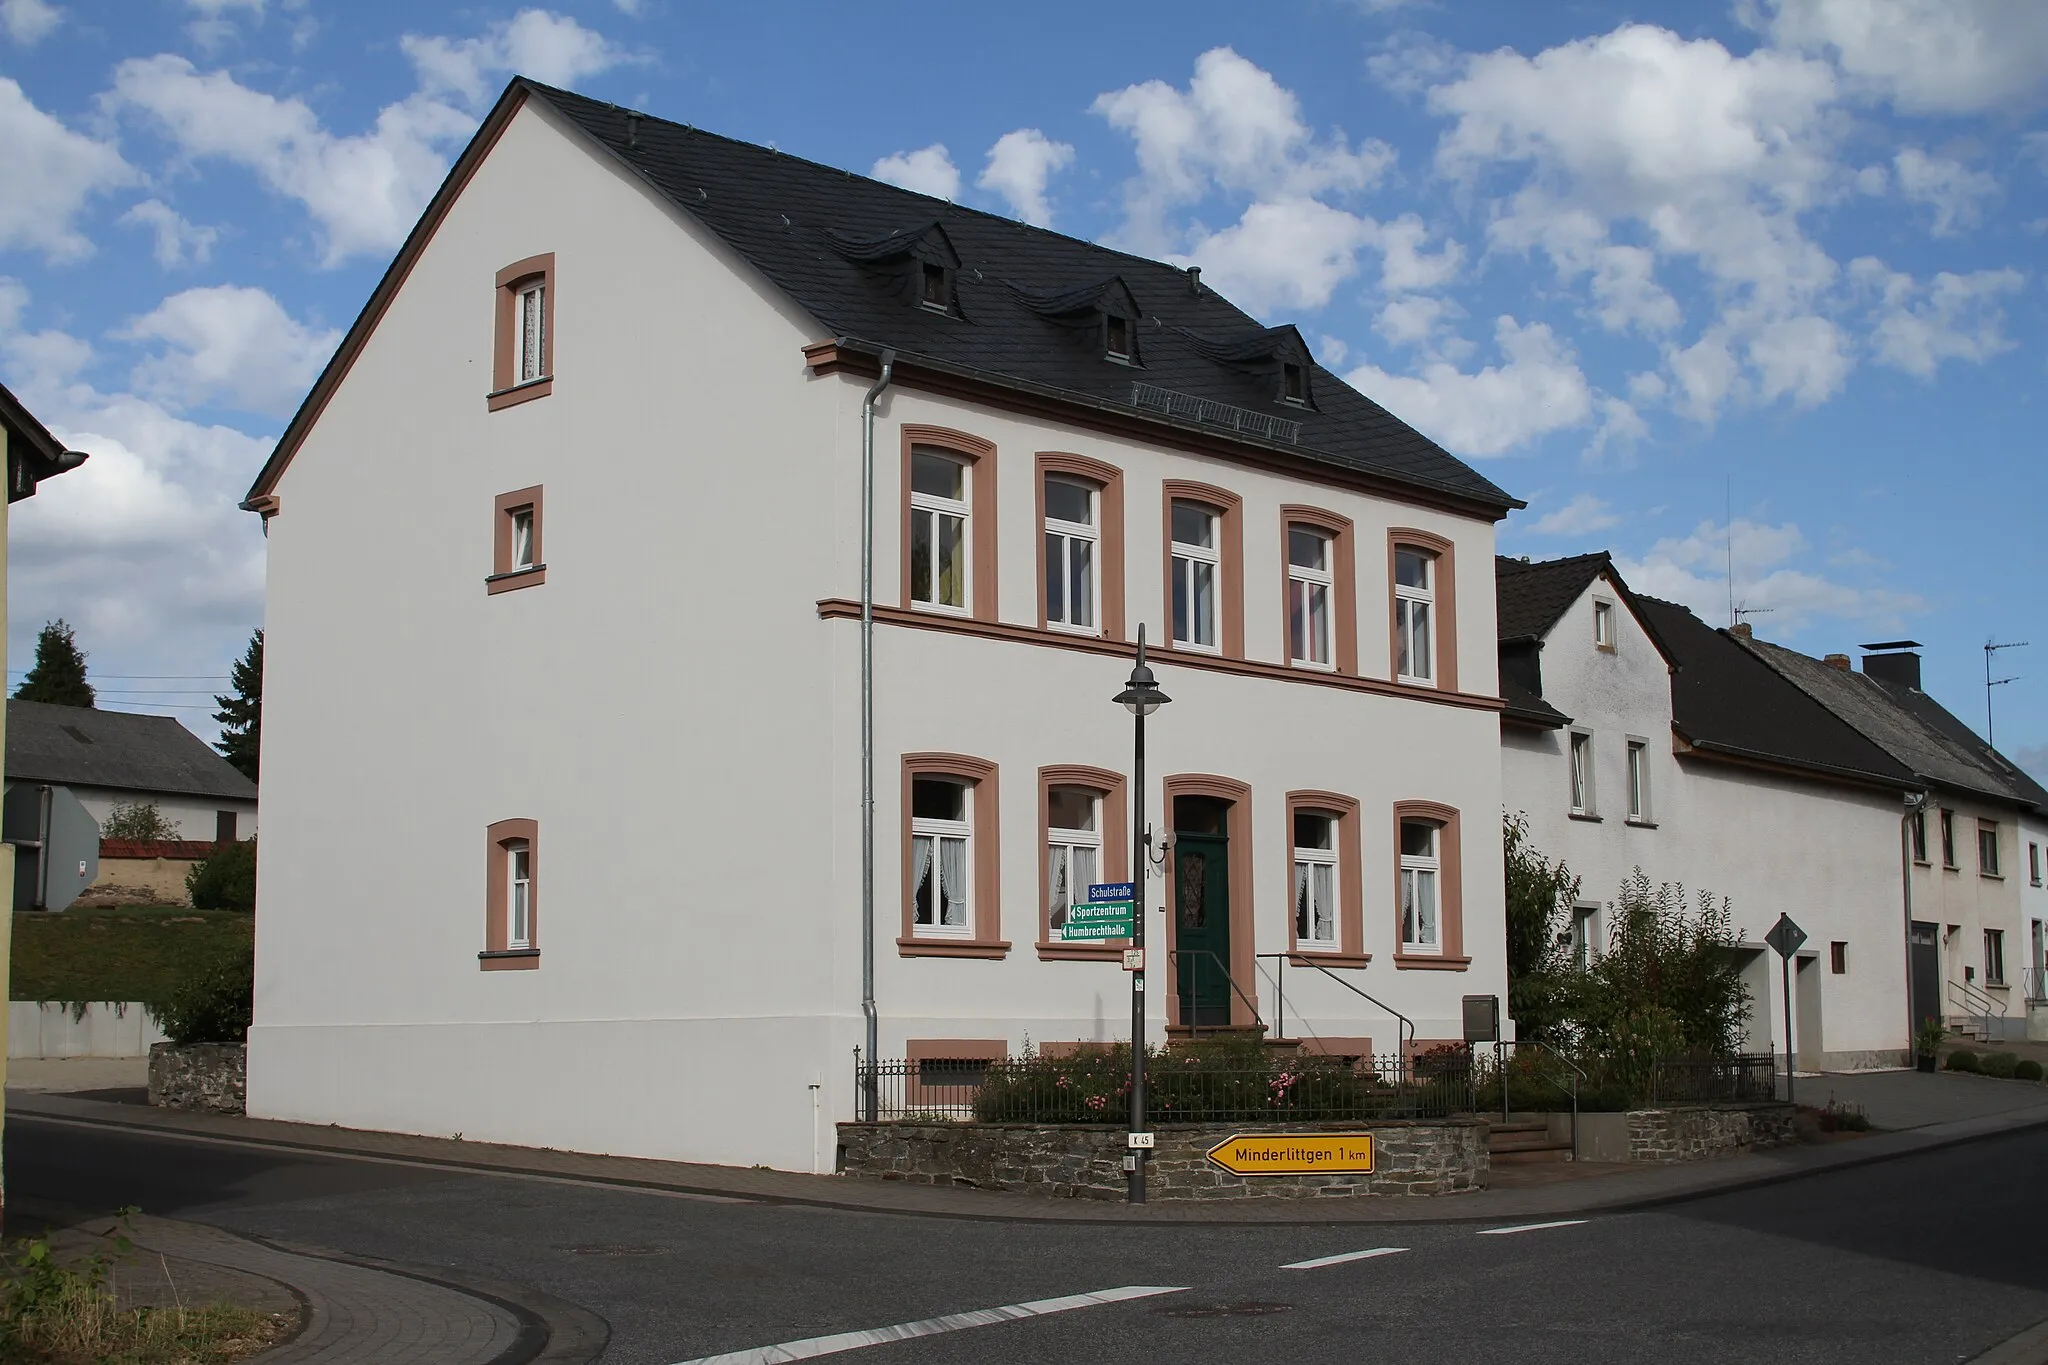 Photo showing: Wohnhaus Hupperath - Pfarrhaus